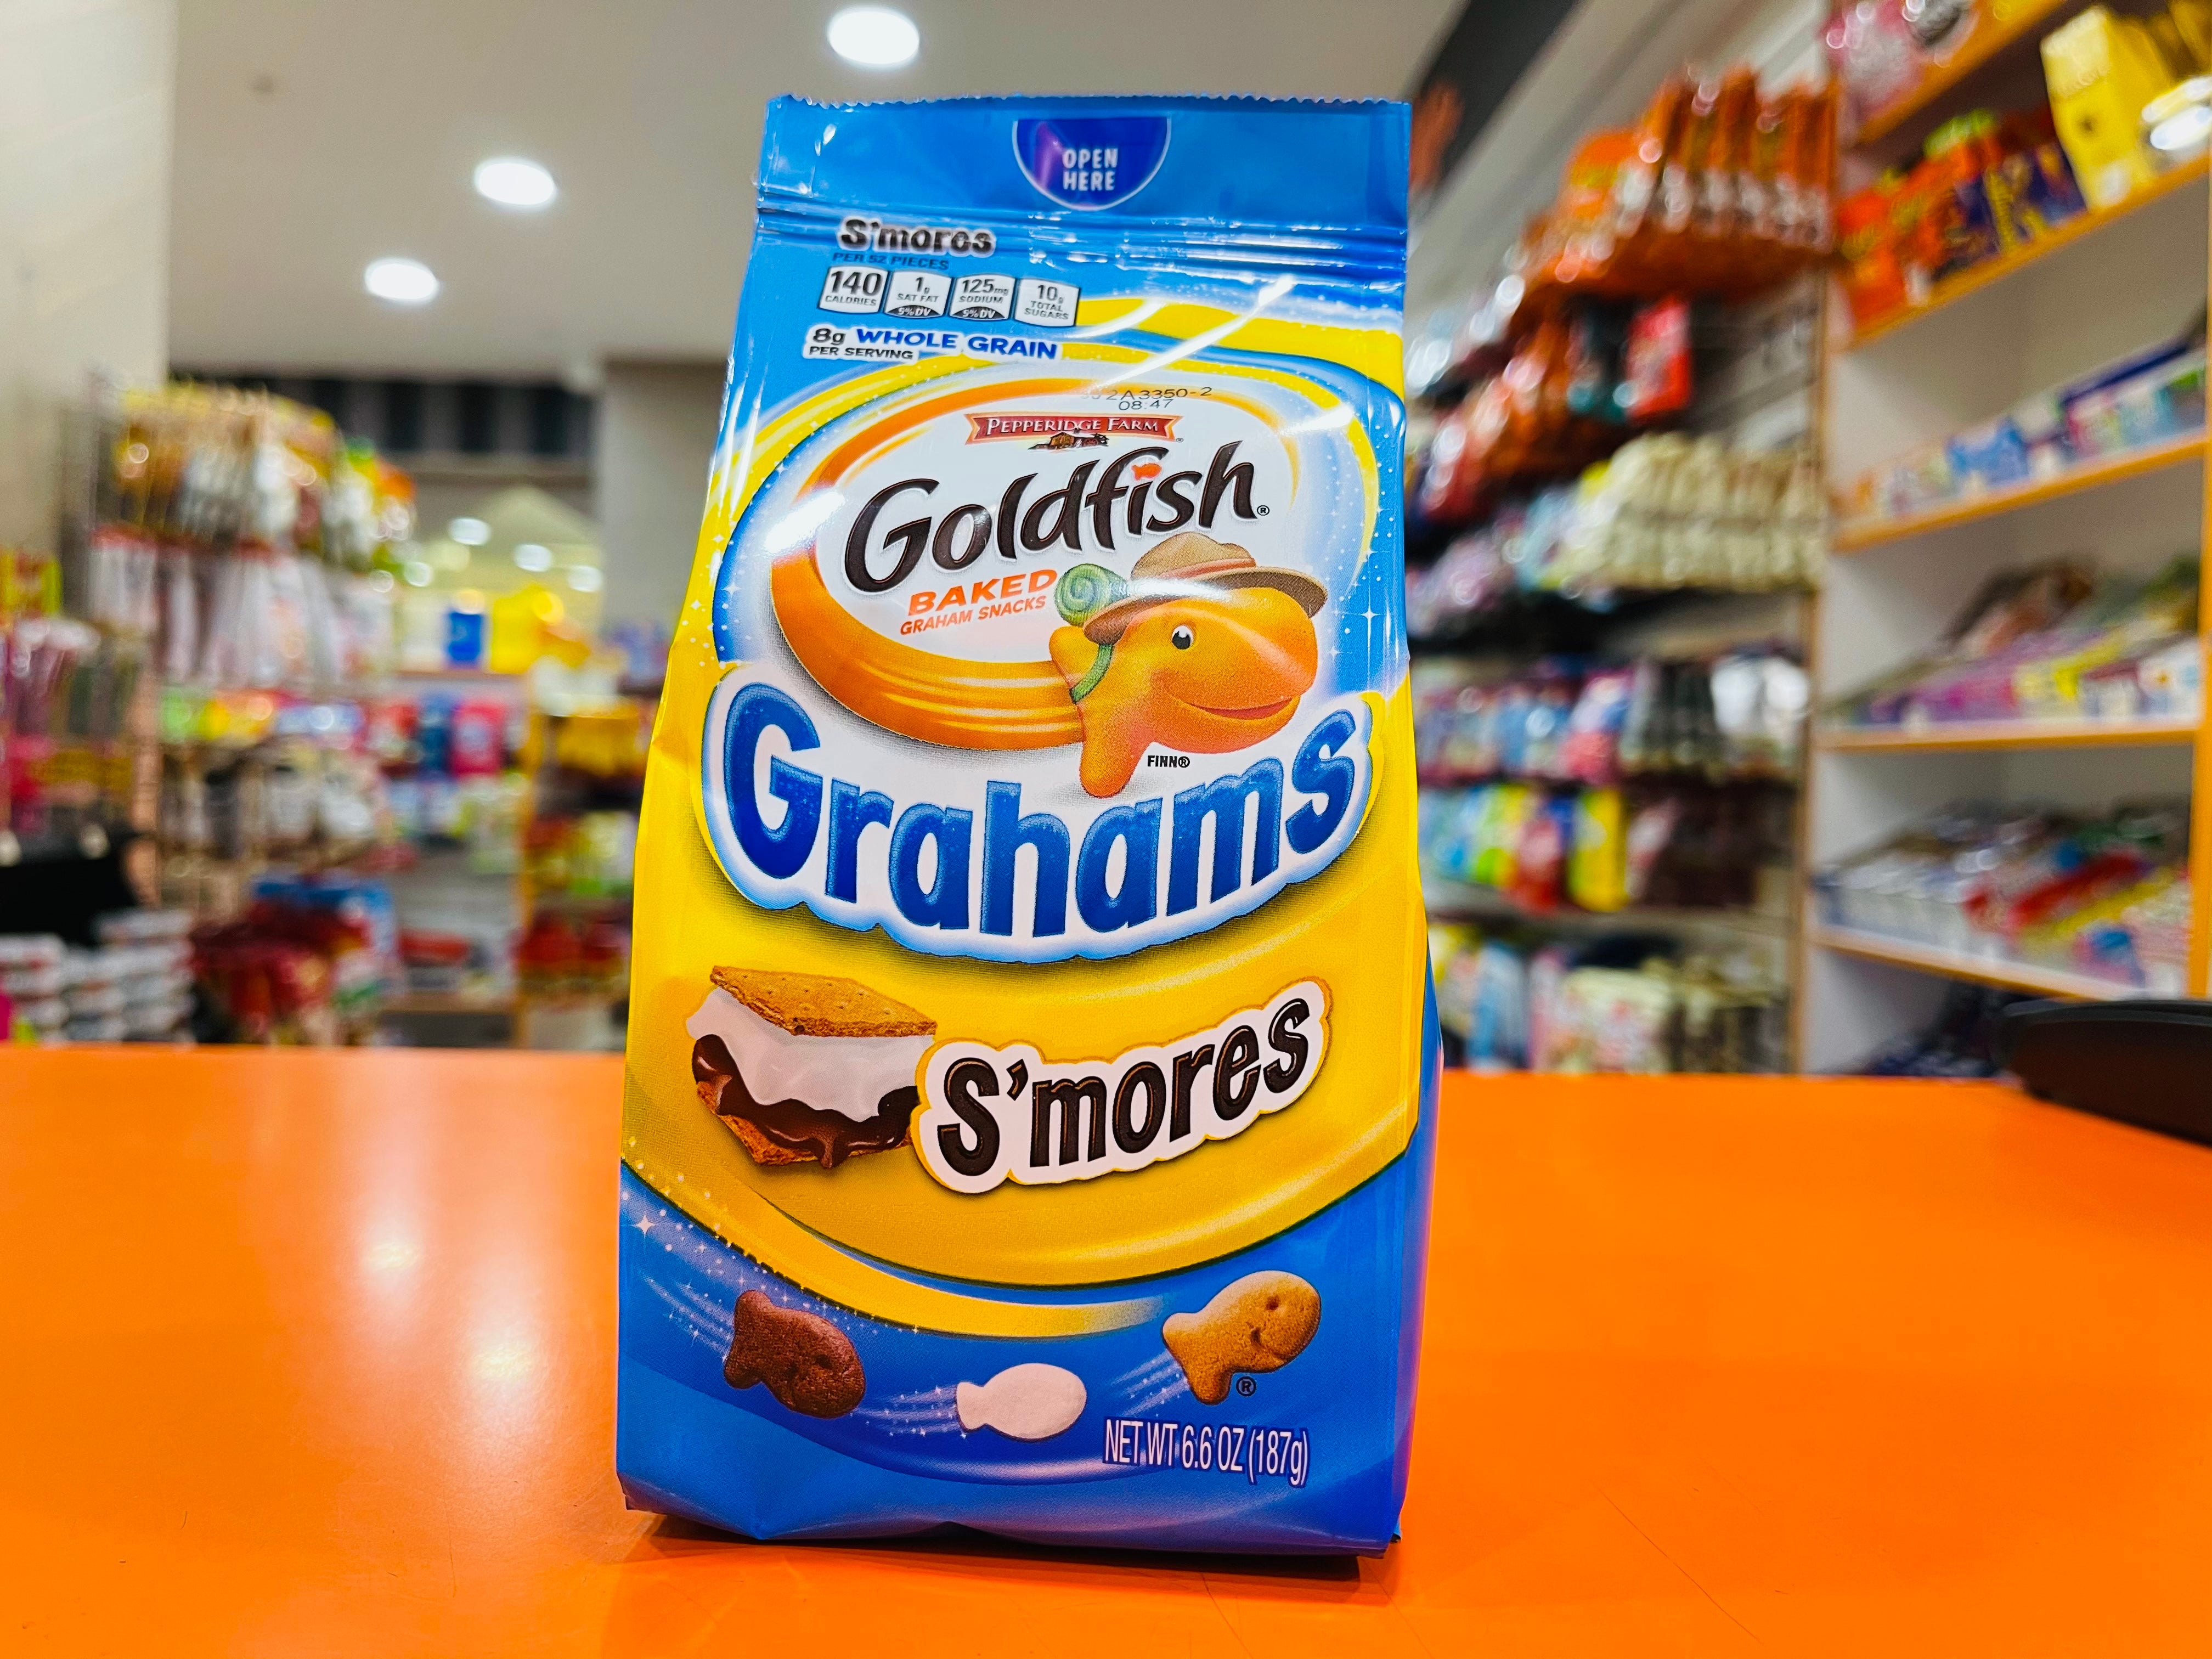 PF Goldfish Grahams S’mores